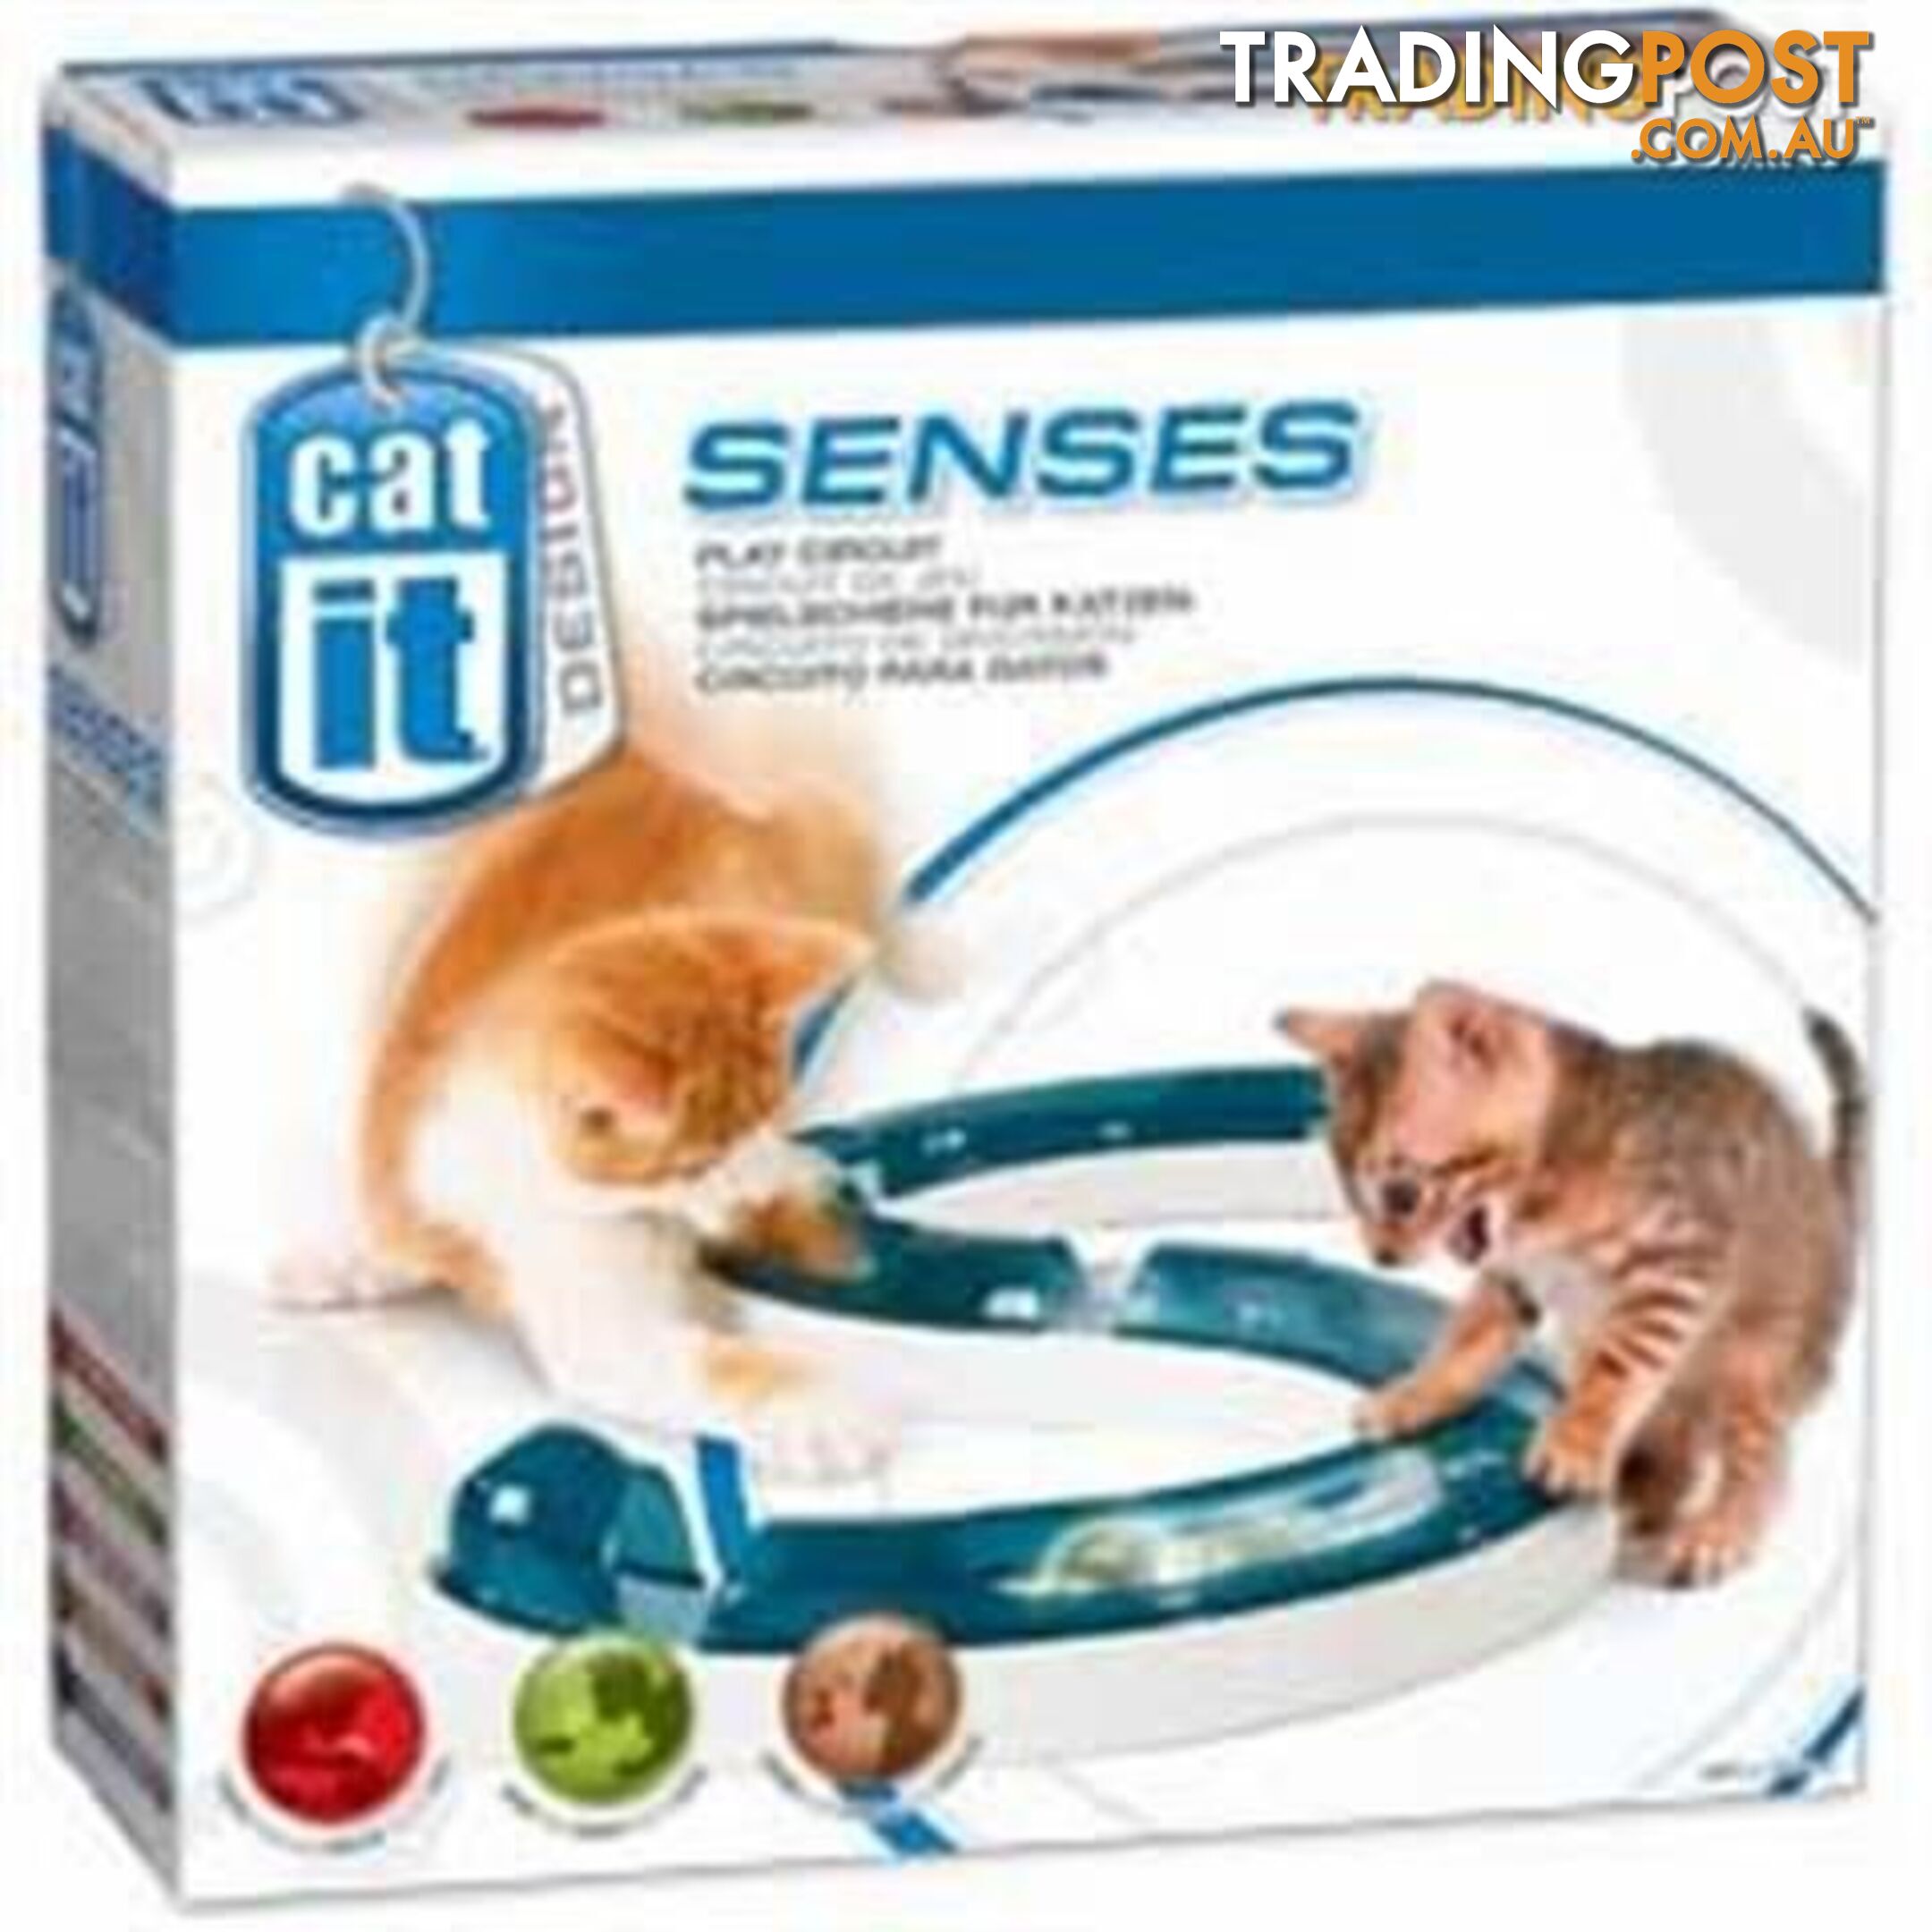 Catit Cat Senses Play Circuit - StockCode: H8PKMV